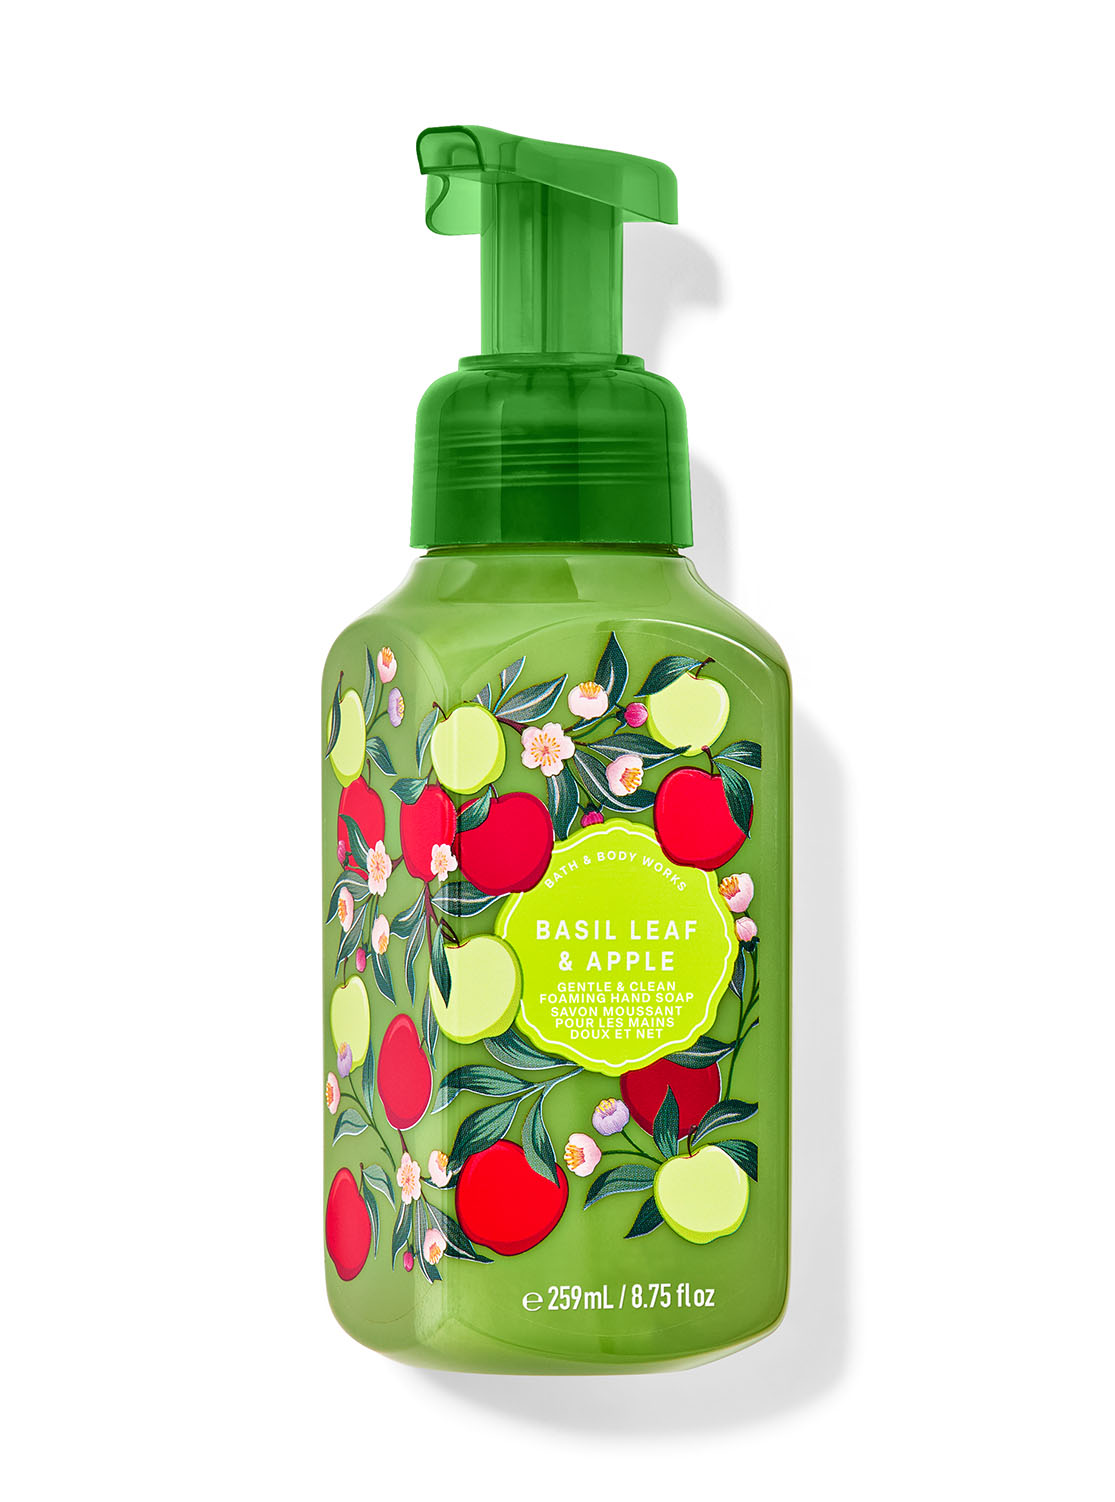 Basil Leaf & Apple Gentle & Clean Foaming Hand Soap